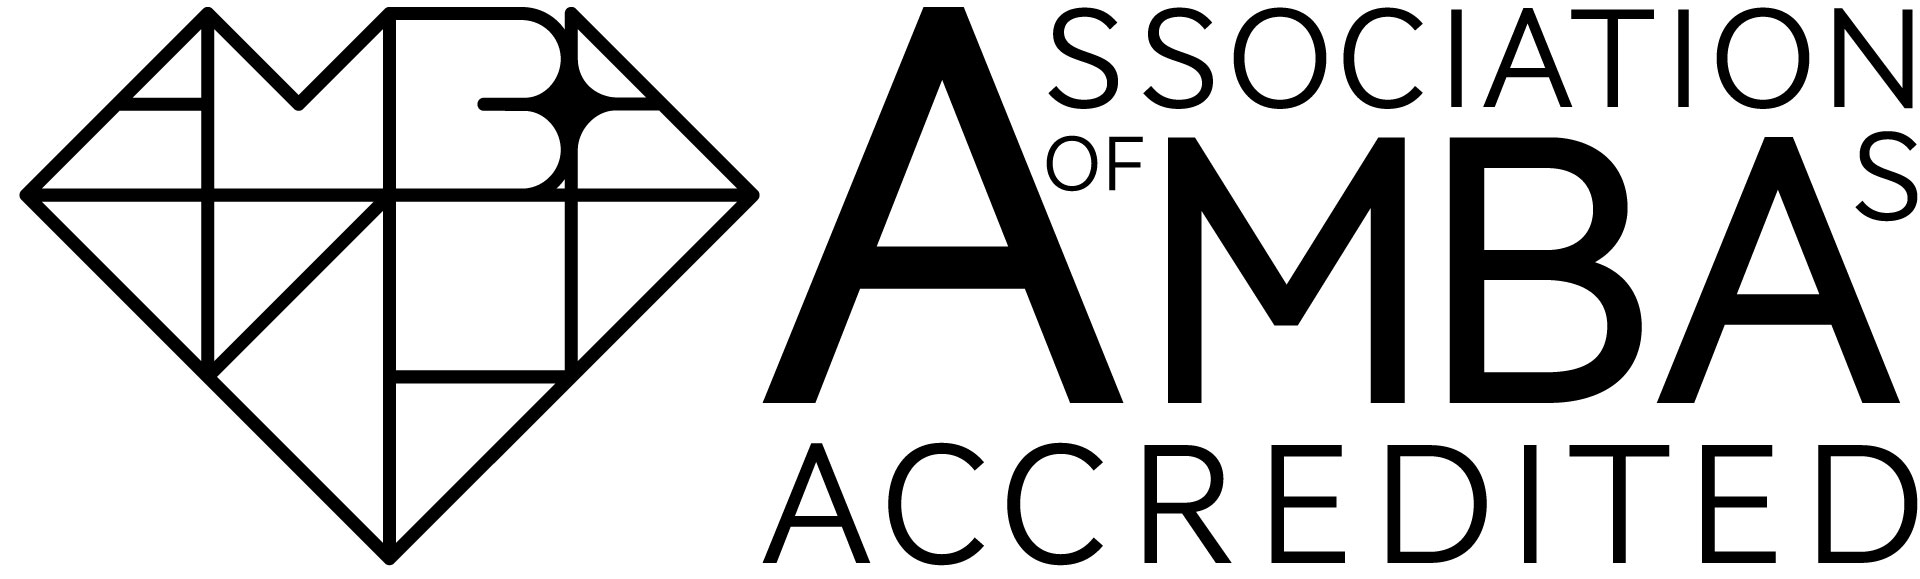 amba accredited